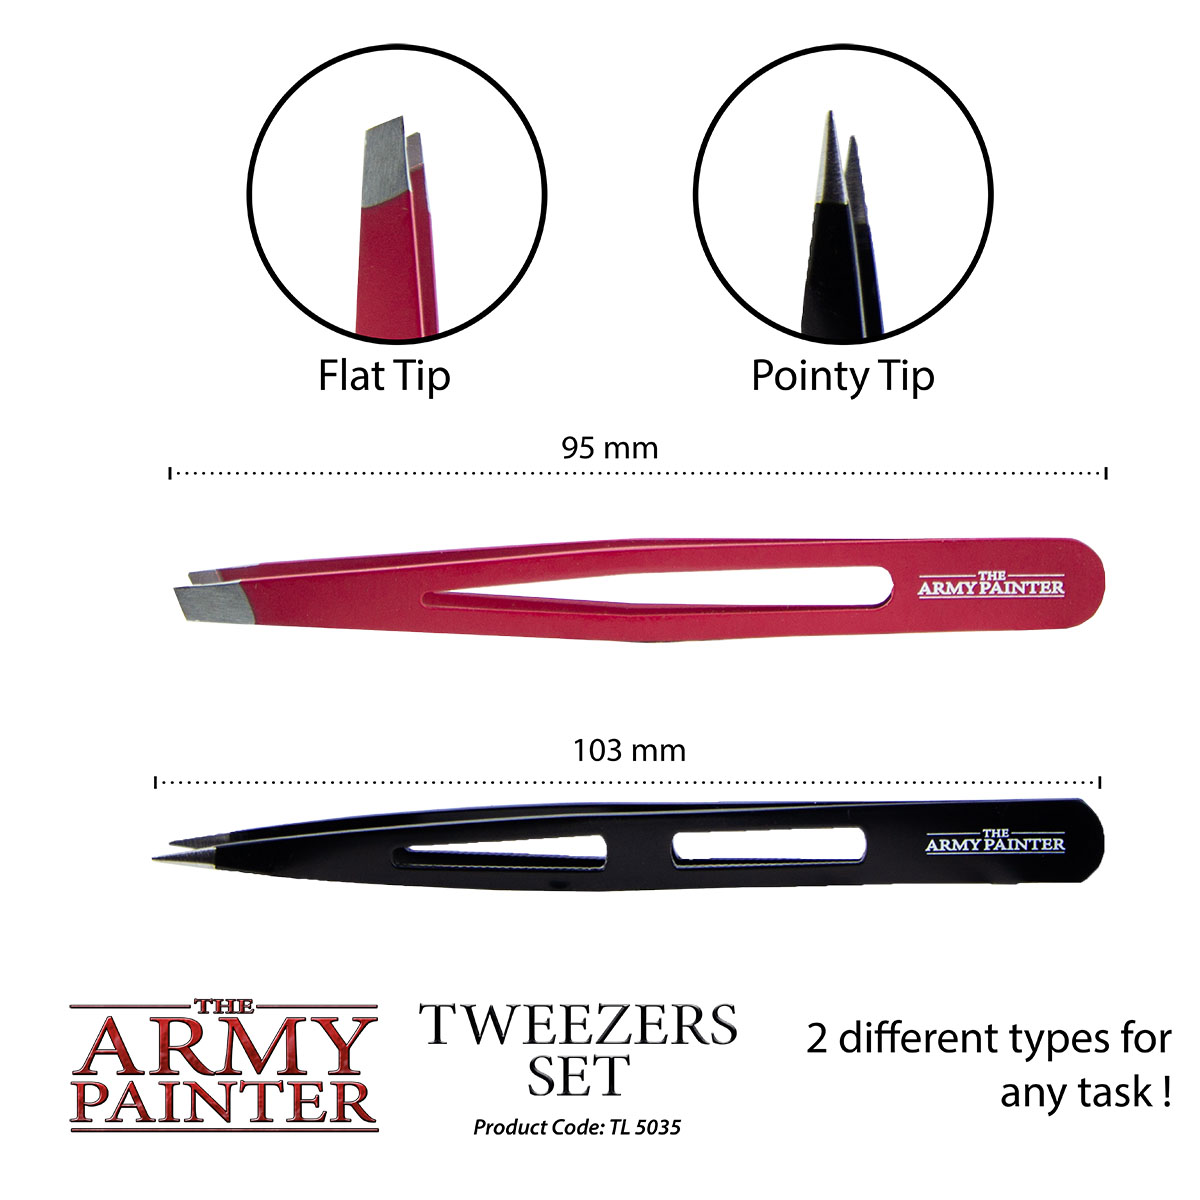 Army Painter Tools - Tweezers Set